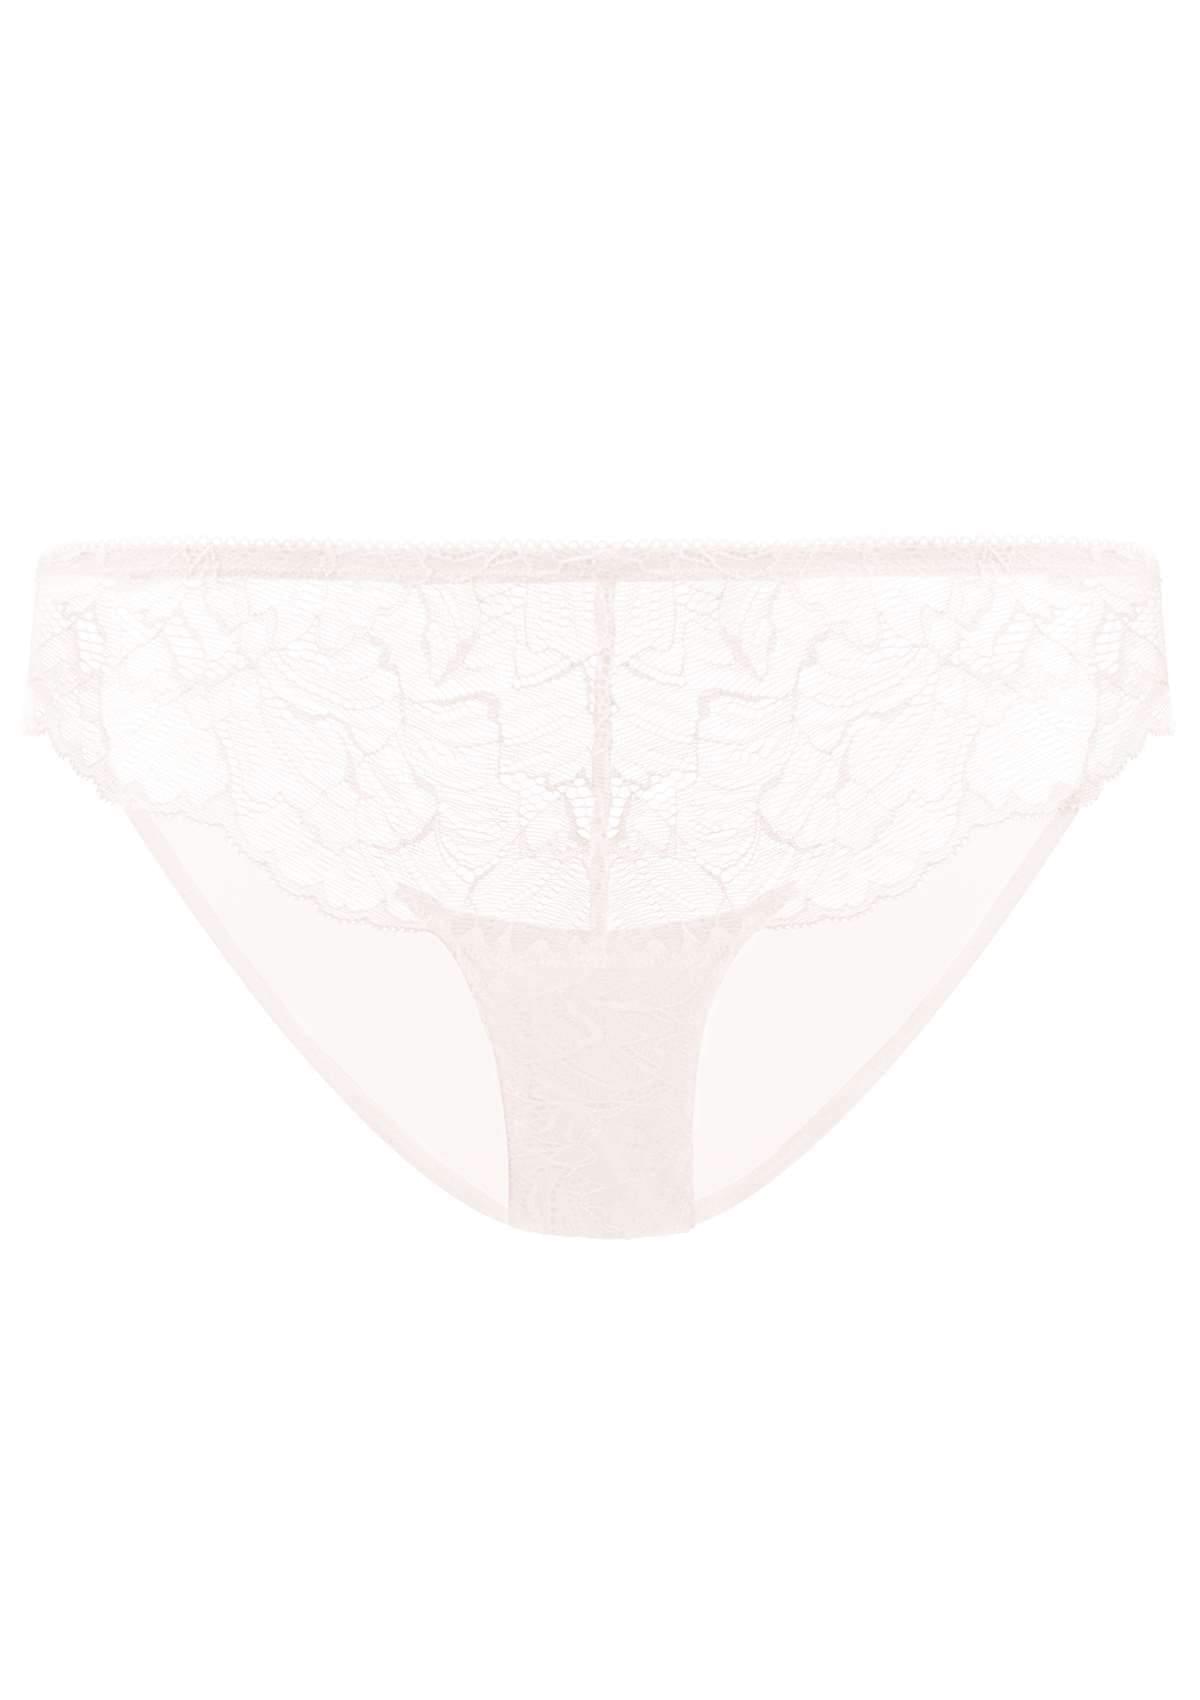 HSIA Blossom Mid-Rise Sheer Lace Lightweight Charming Feminine Pantie - XXXL / Dusty Peach / High-Rise Brief